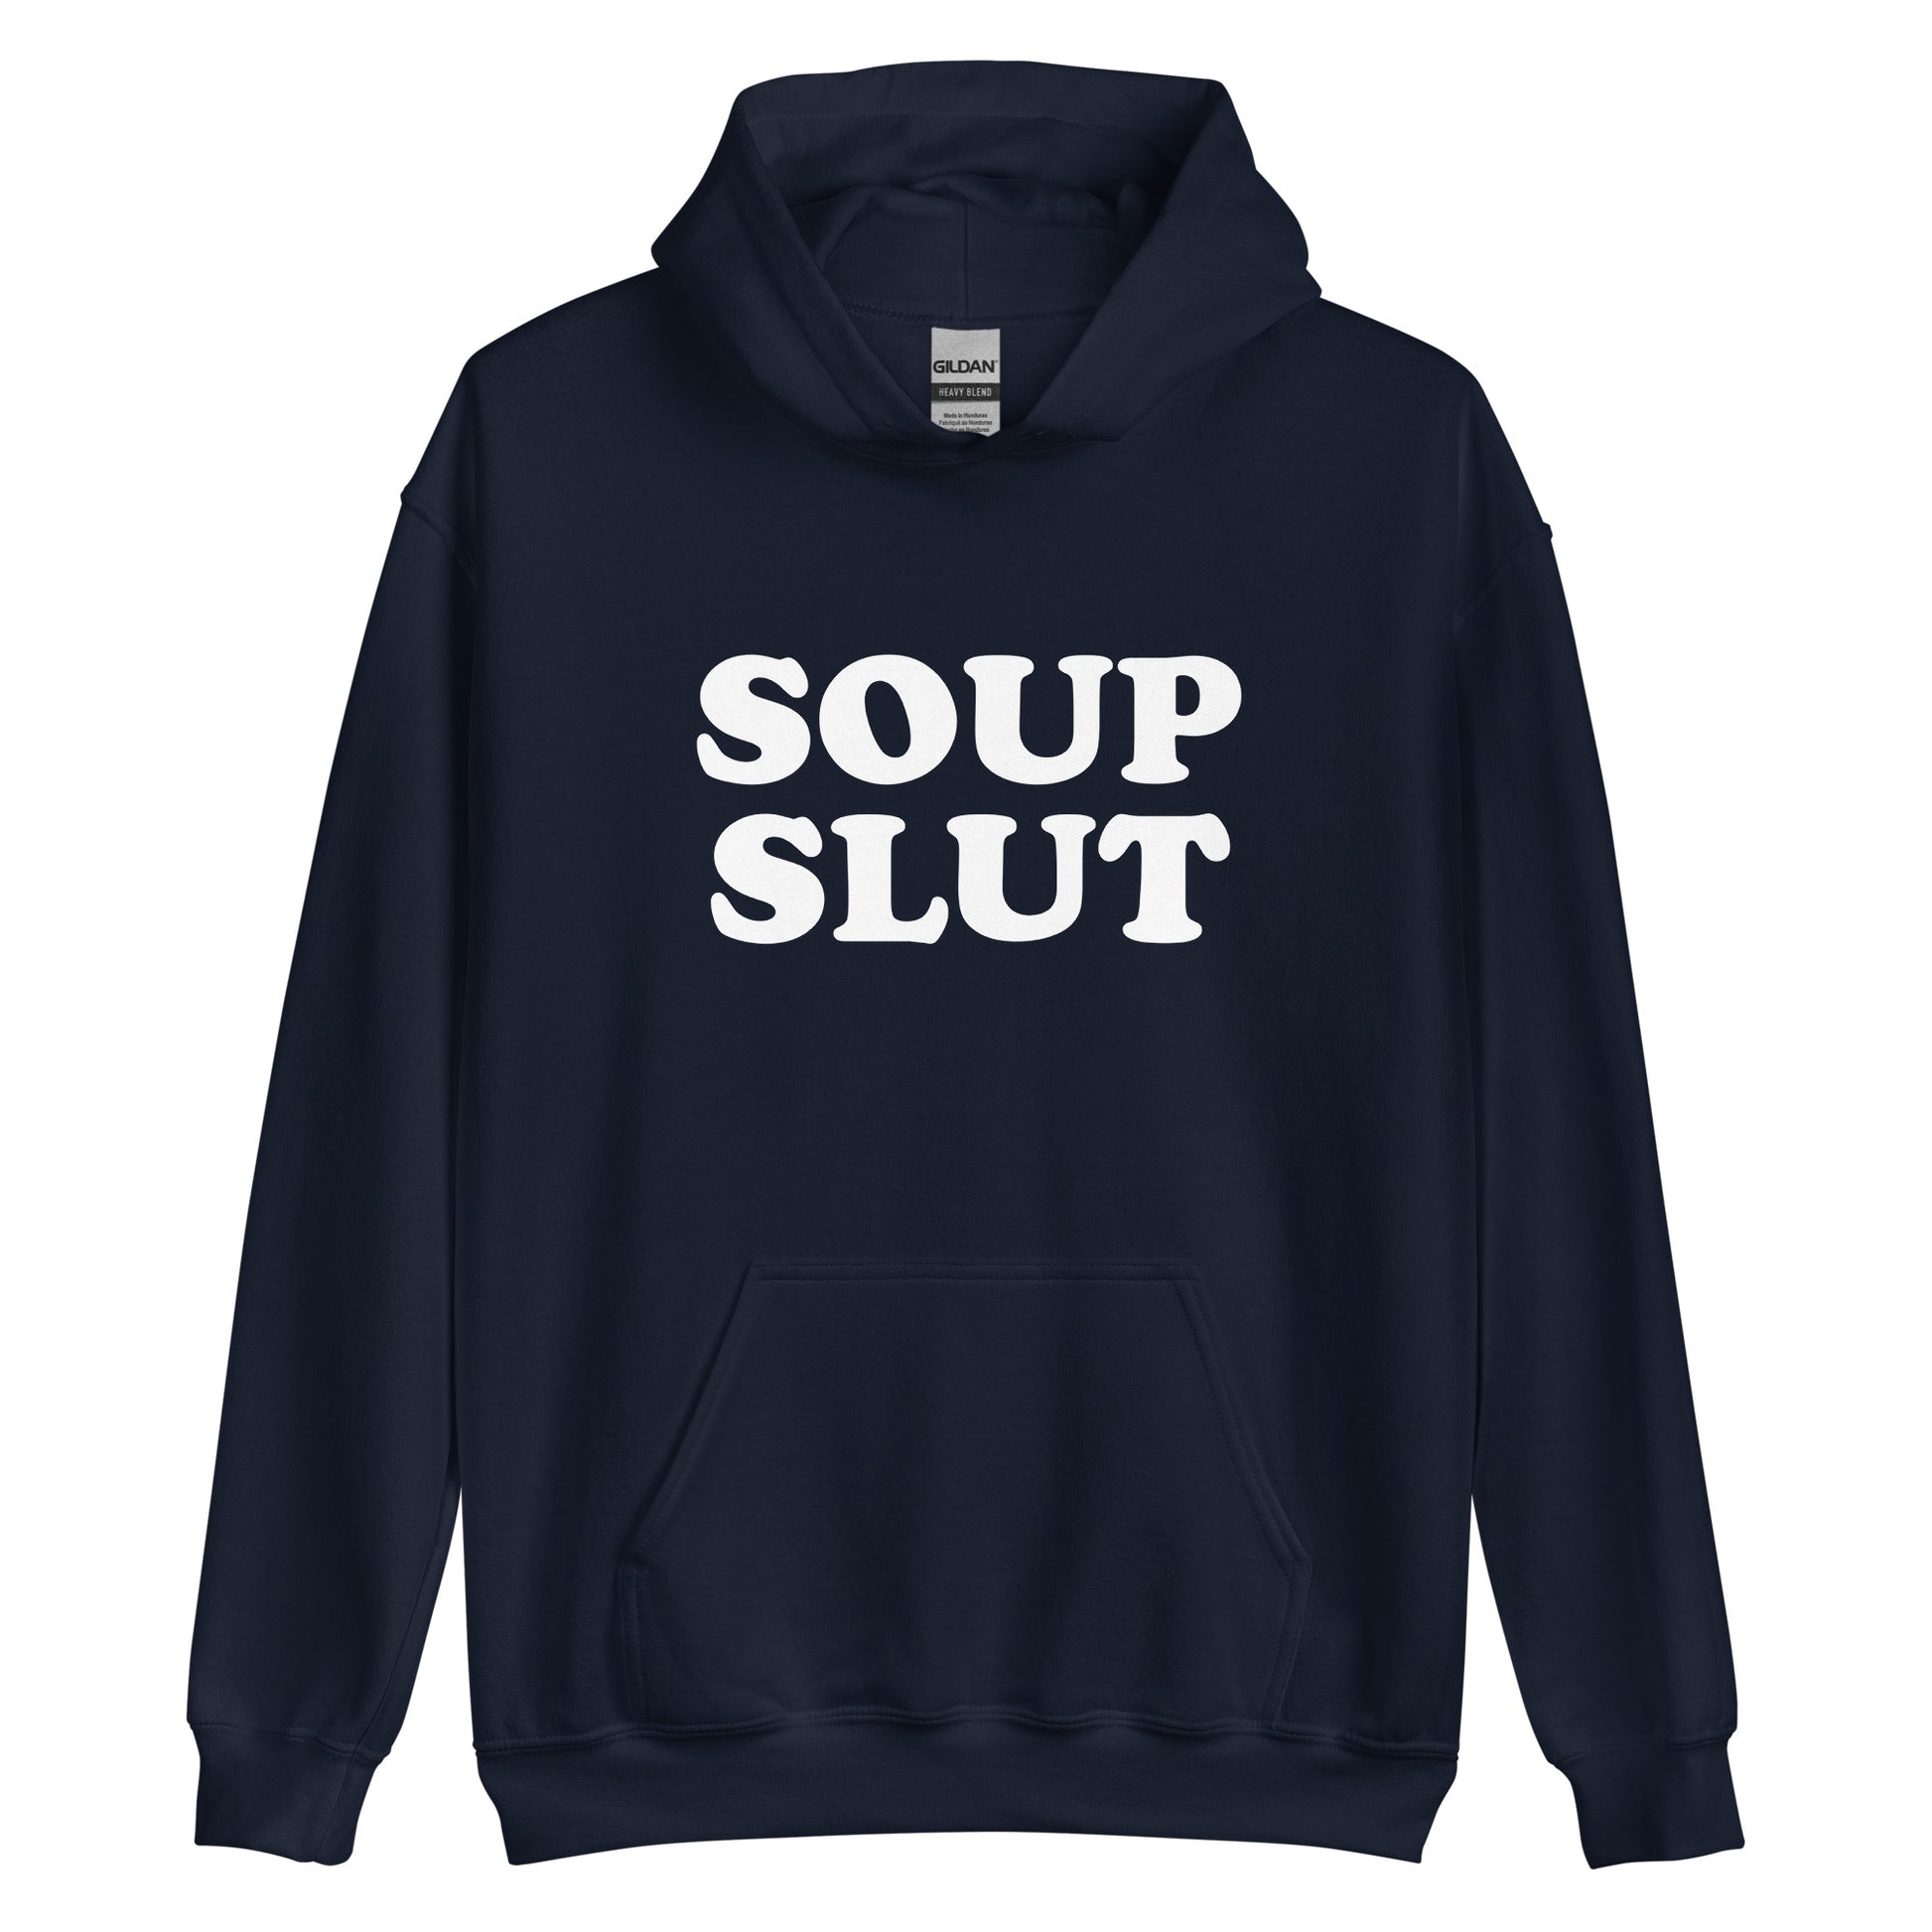 Soup Can Hooded Sweatshirt - Shop - Supreme